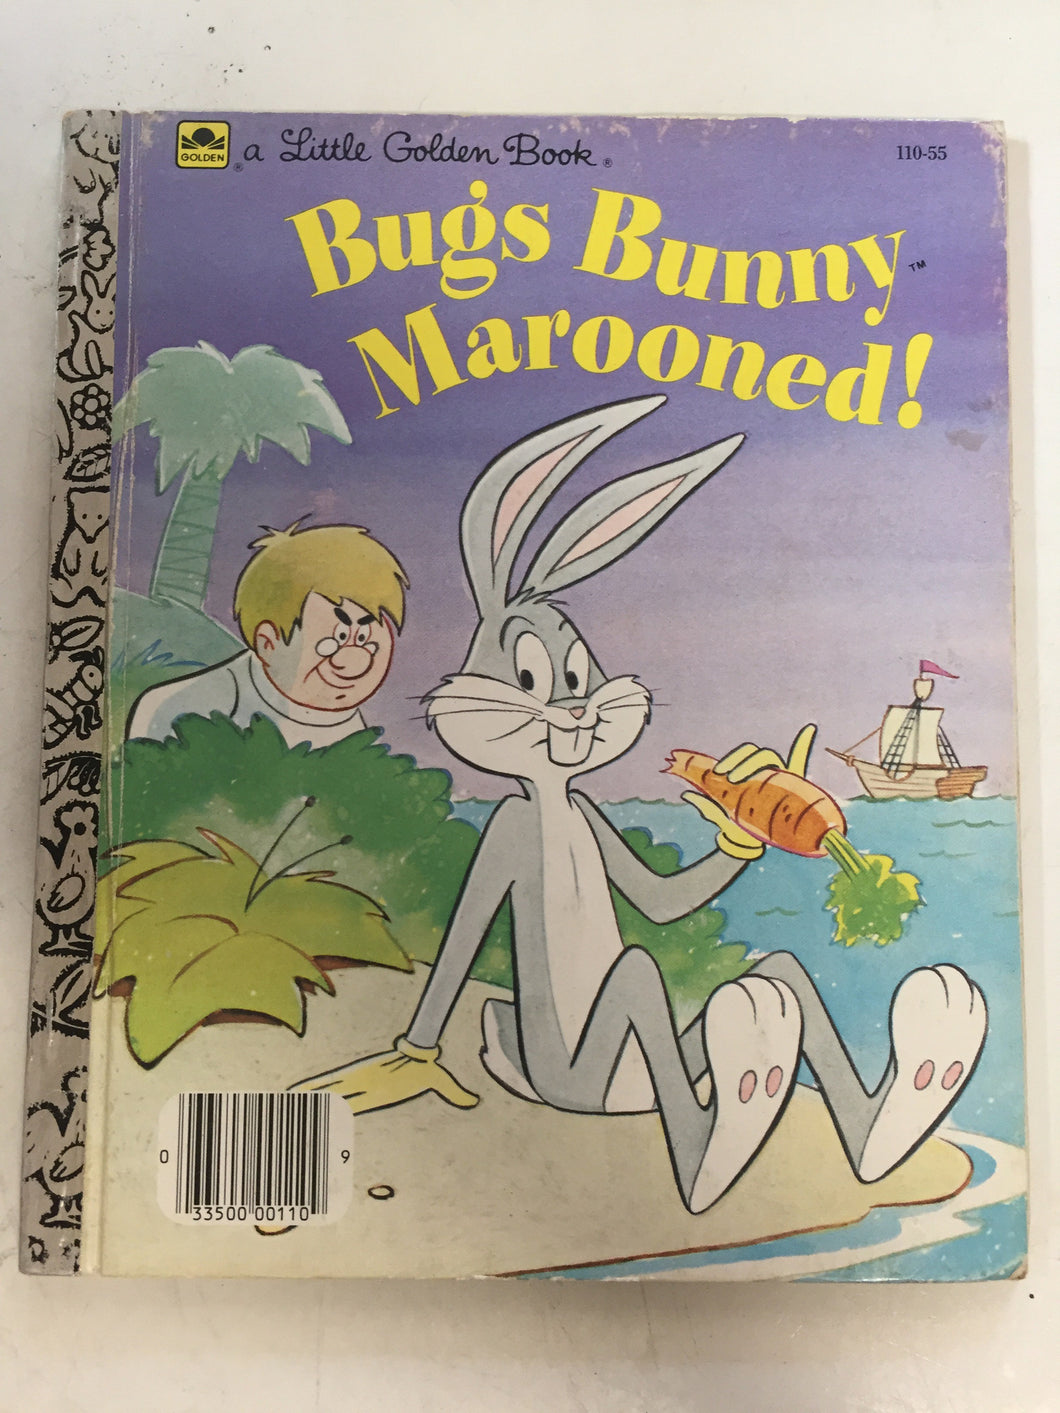 Bugs Bunny Marooned! - Slick Cat Books